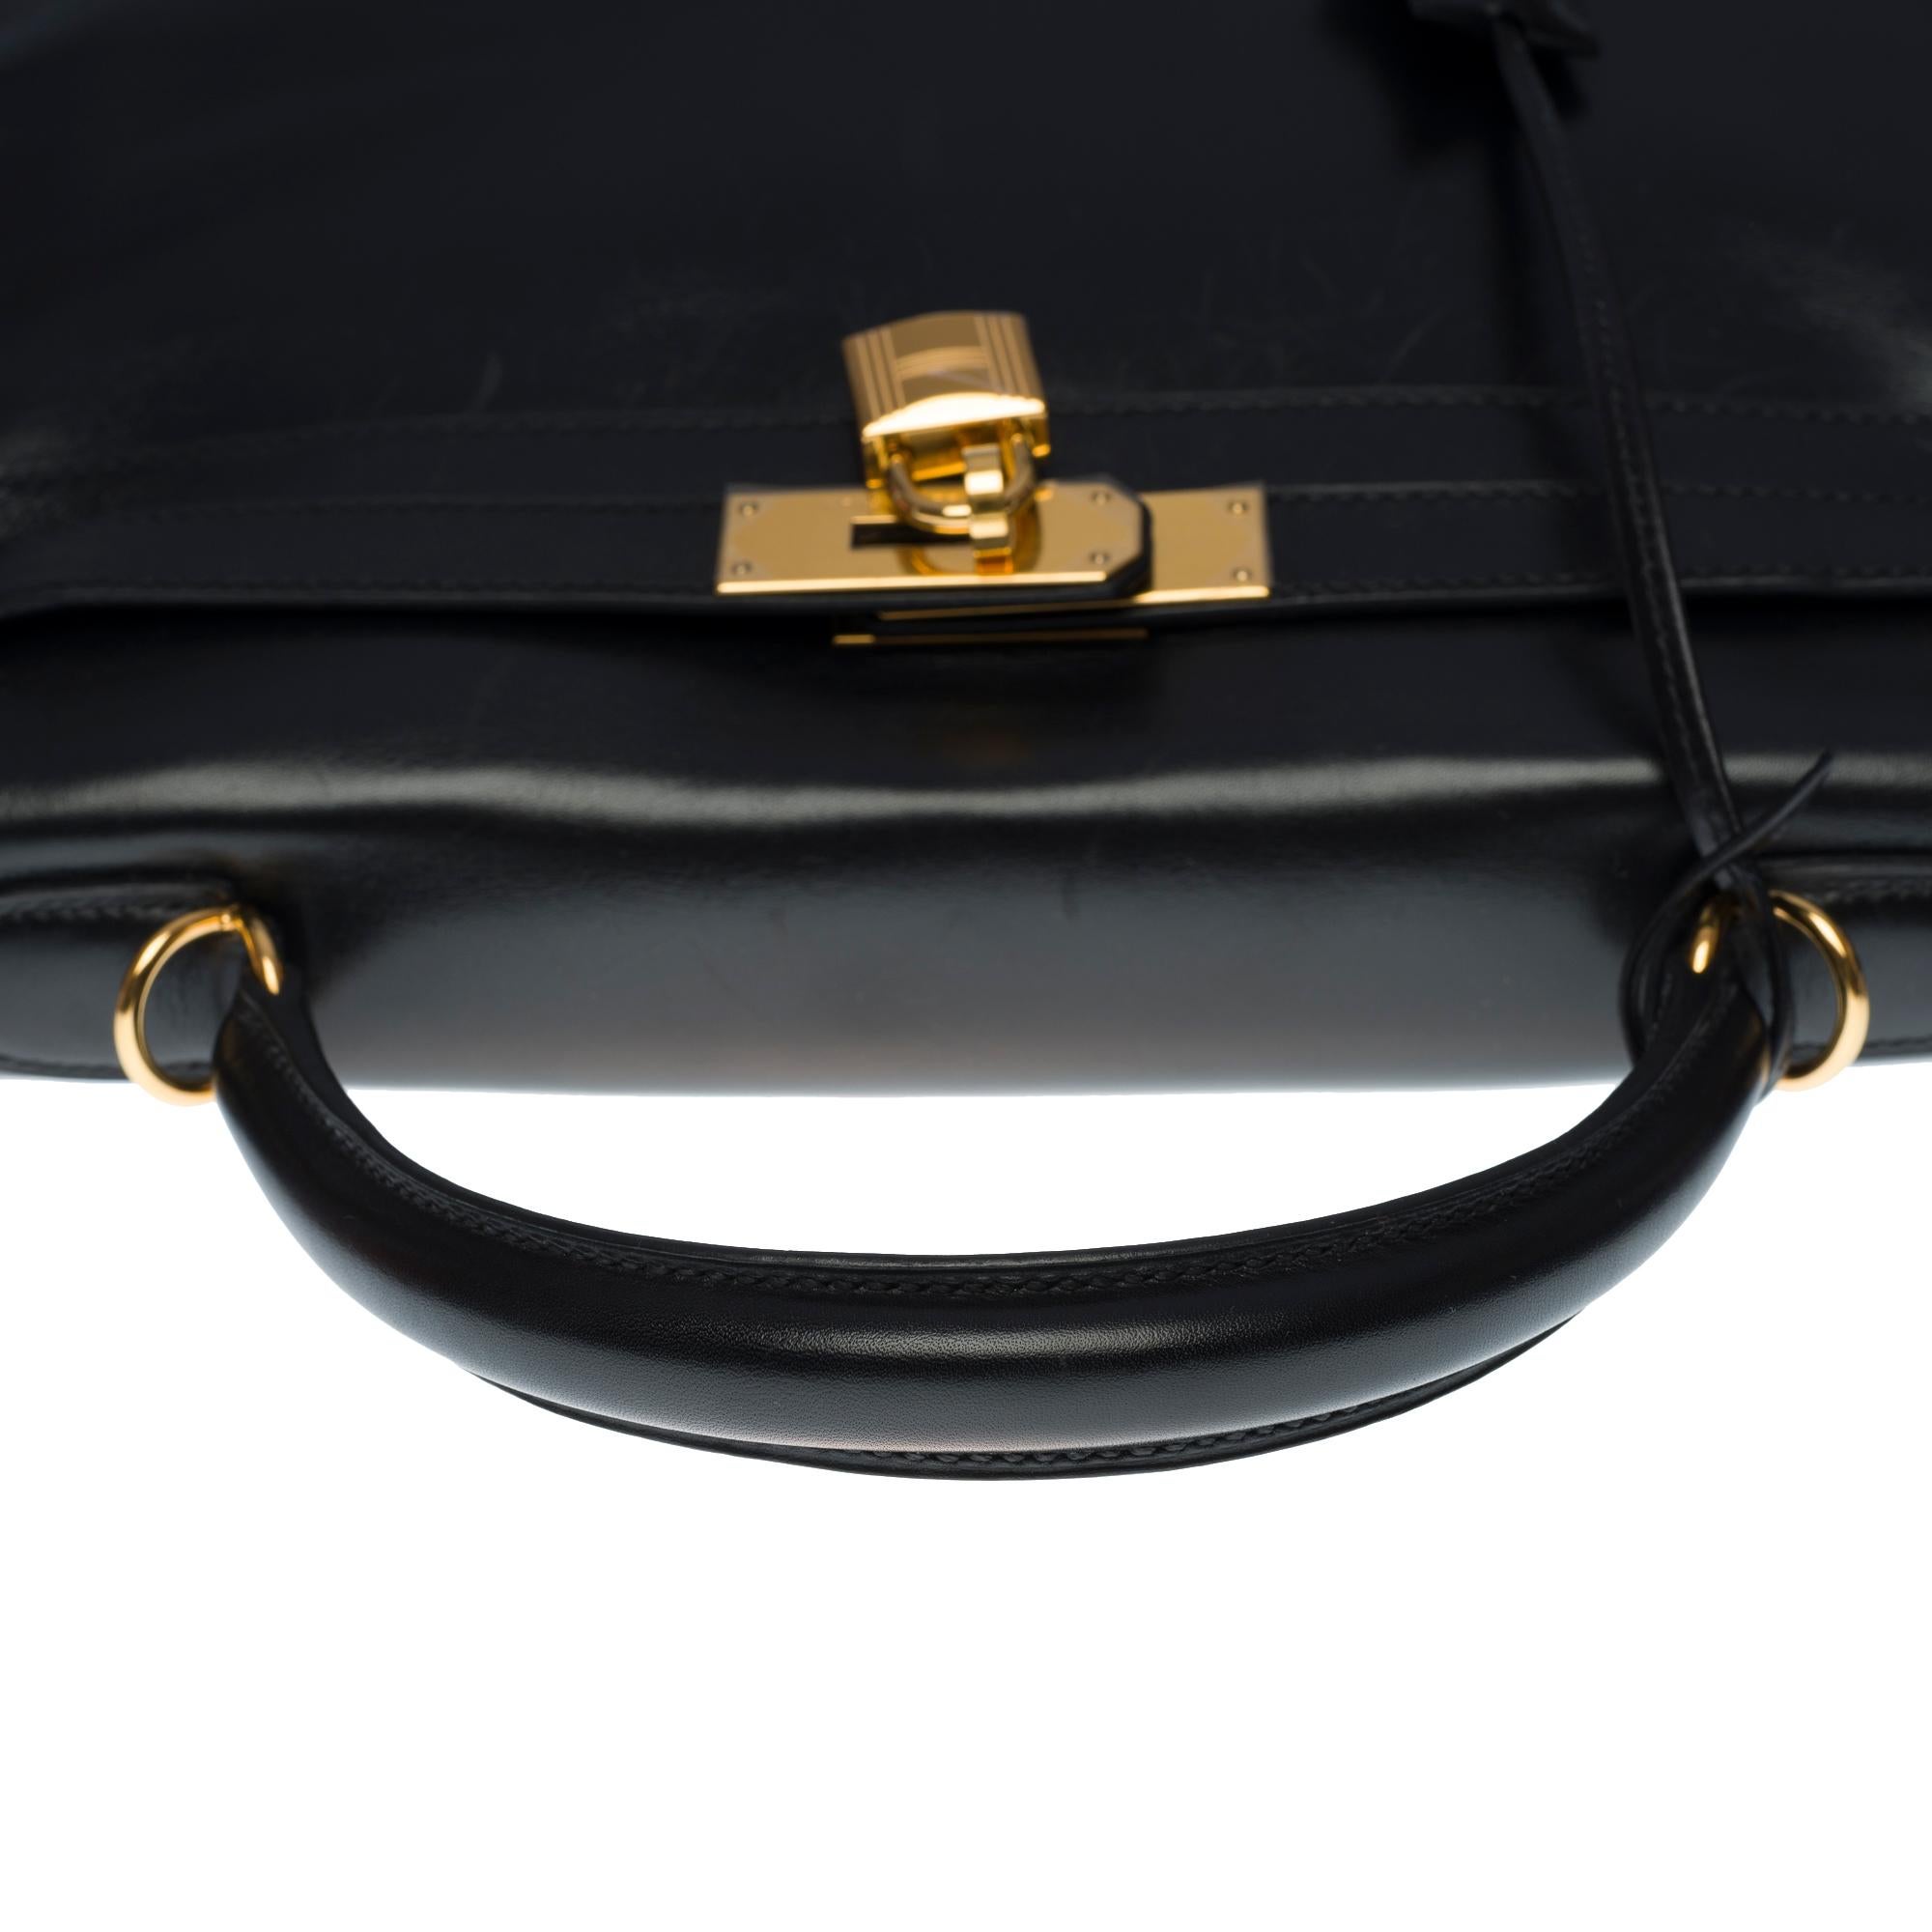 Rare Hermès Kelly 32 retourne handbag strap in black box calfskin leather, GHW 2